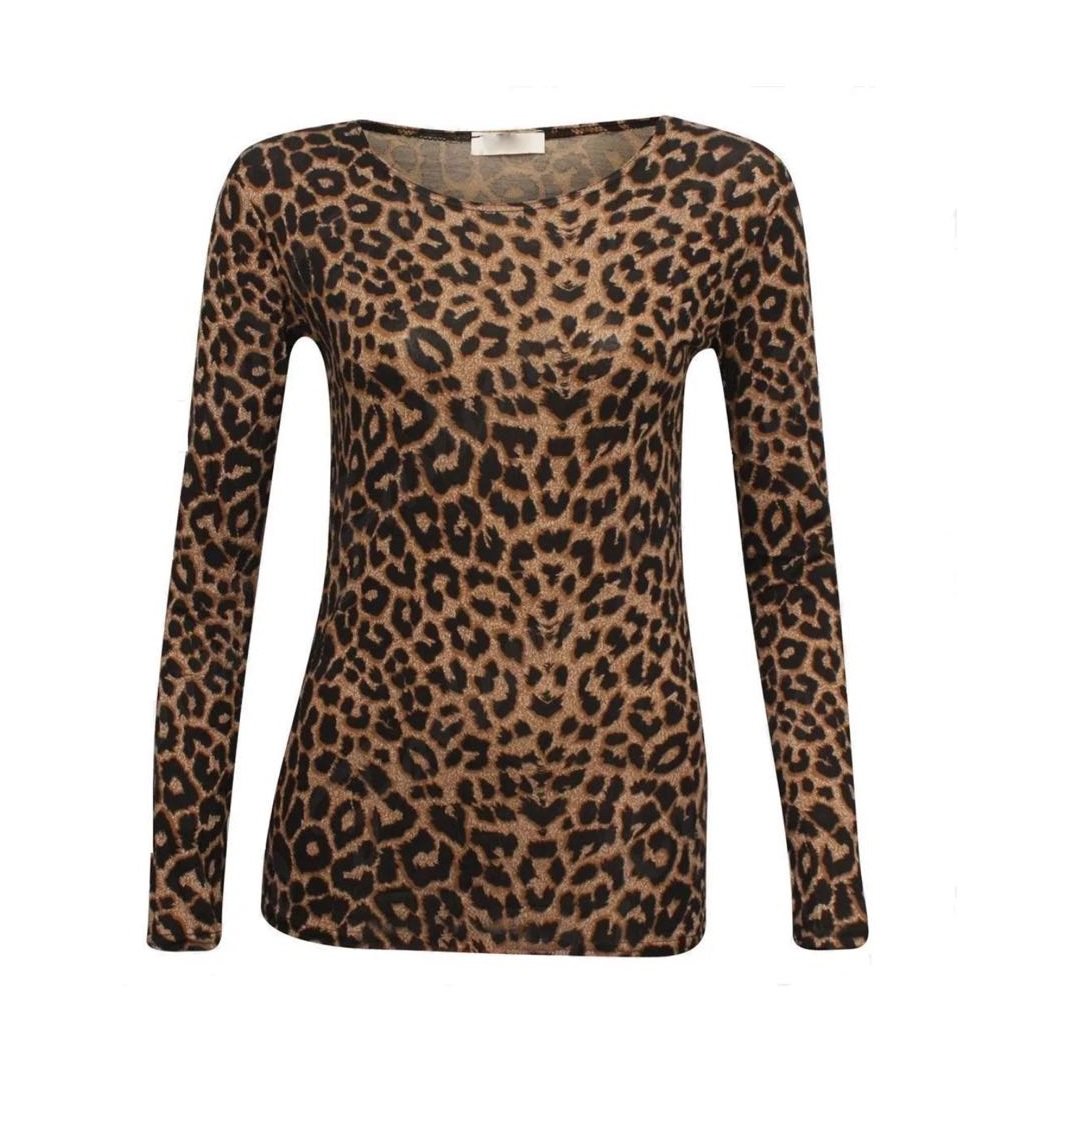 Women's Brown Leopard Print Long Sleeve Top Size XL